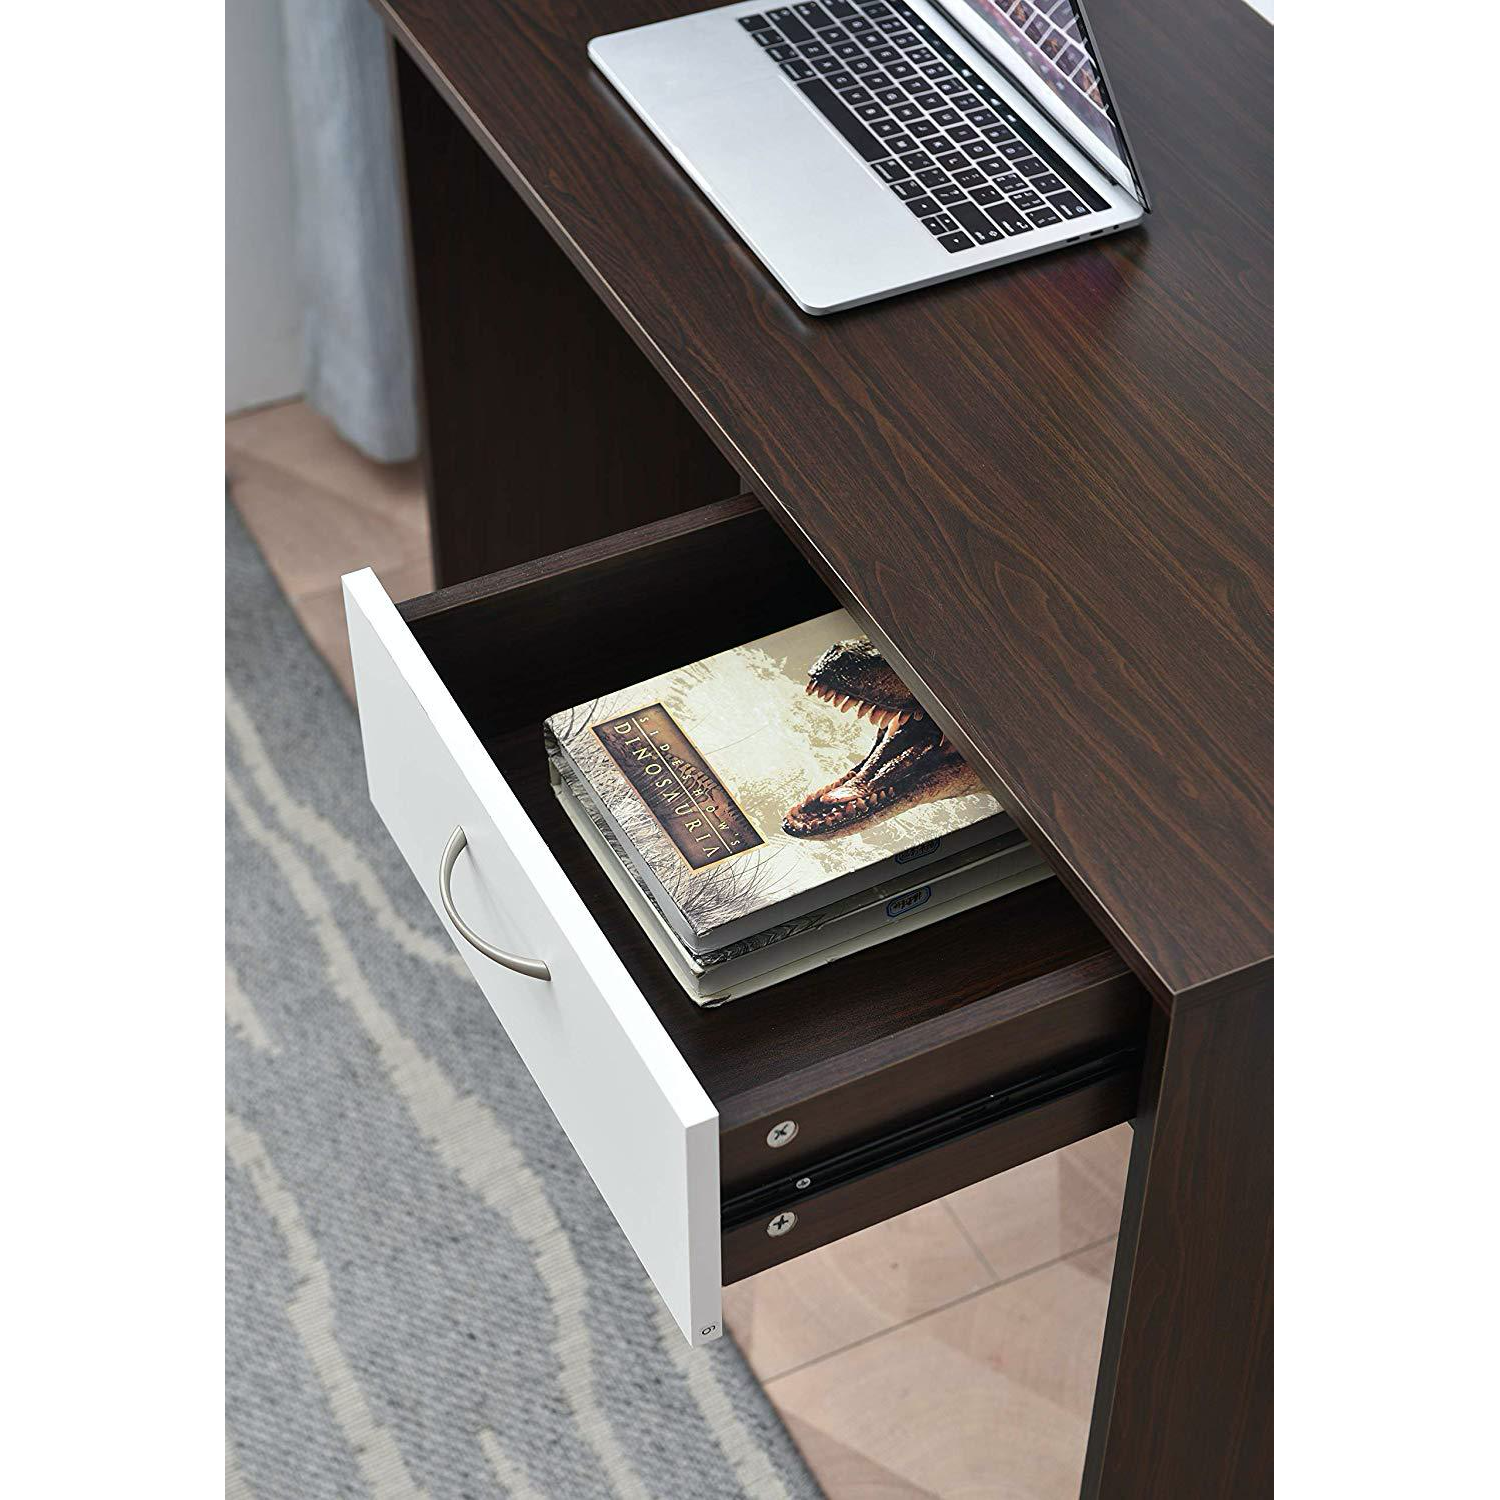 Cherry Tree Furniture MERV Computer Desk Home Office Desk with Drawer Walnut & White Colour